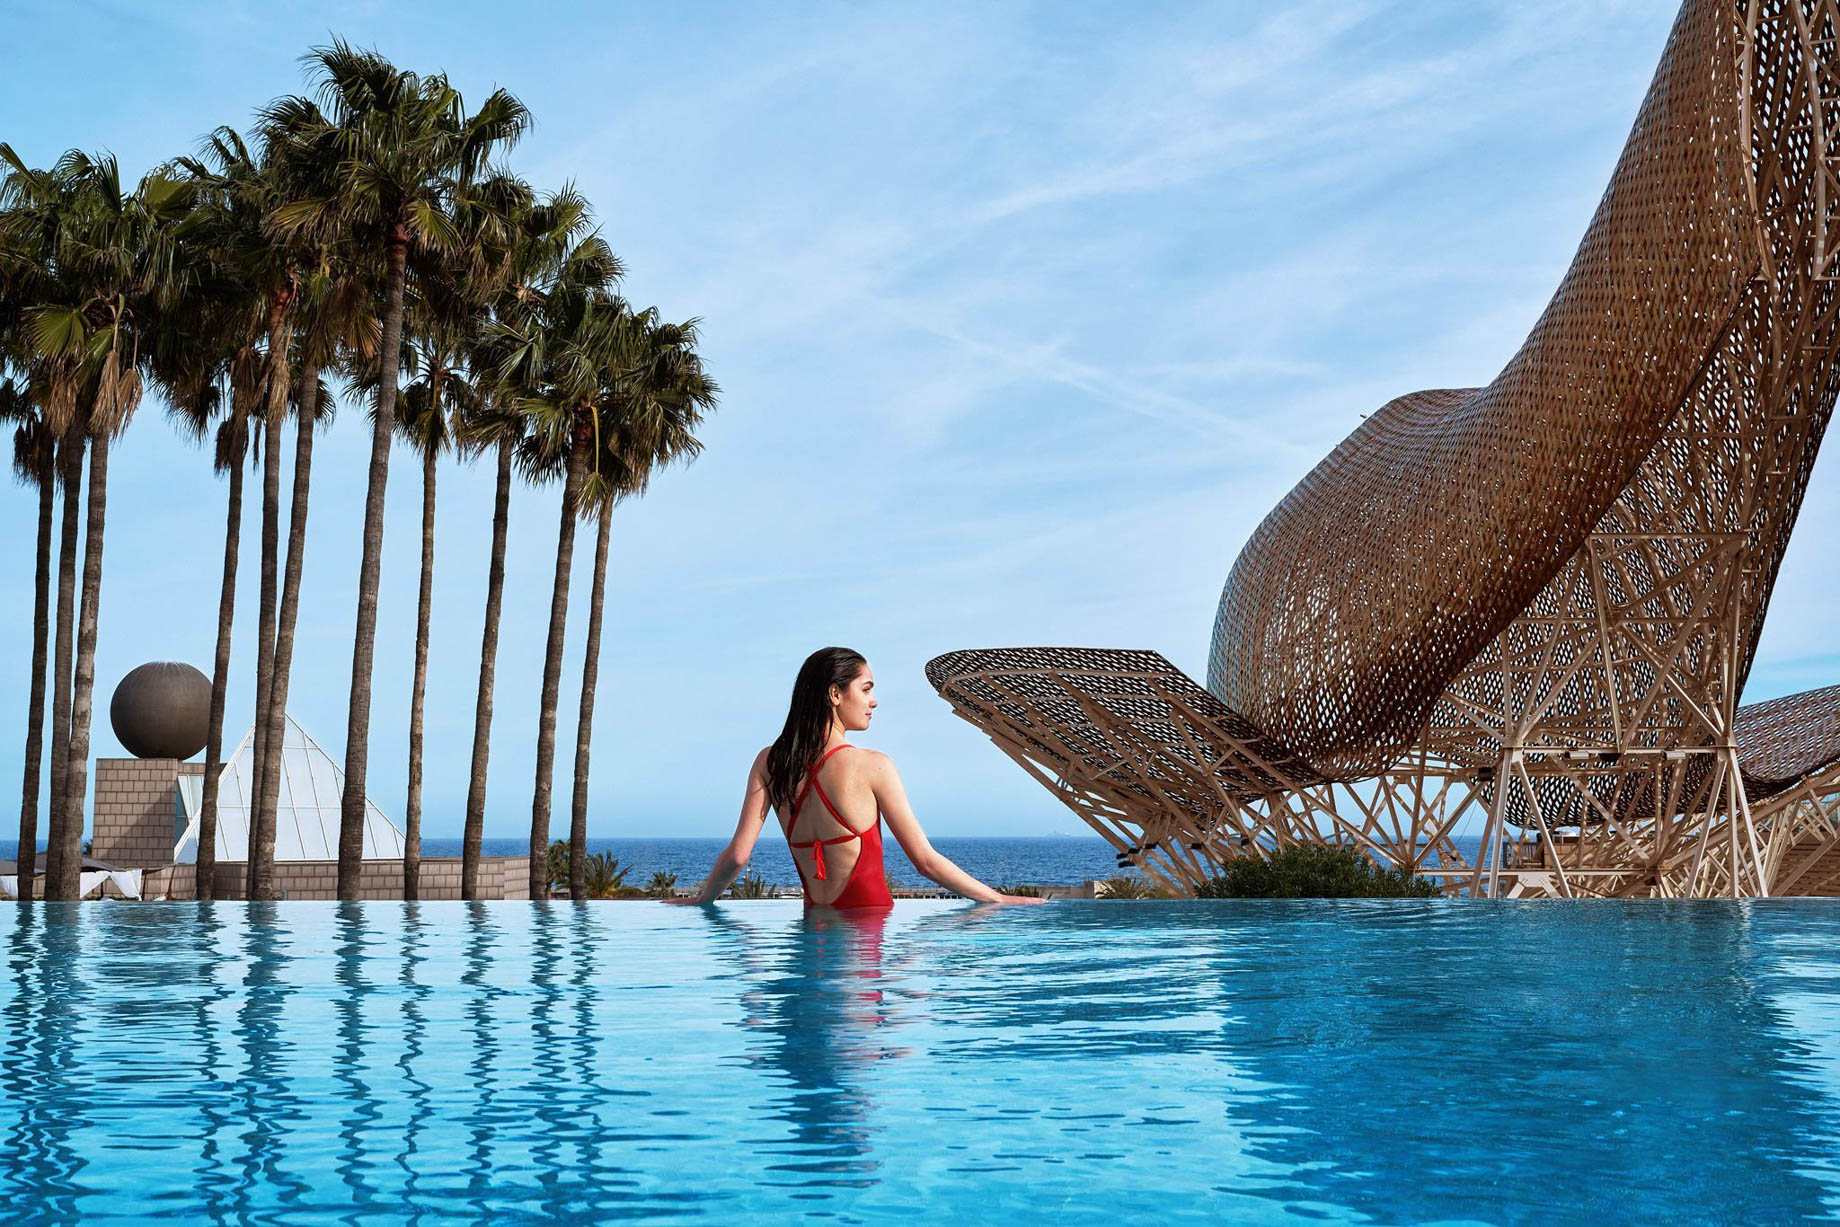 Hotel Arts Barcelona Ritz-Carlton - Barcelona, Spain - Exterior Pool Ocean View